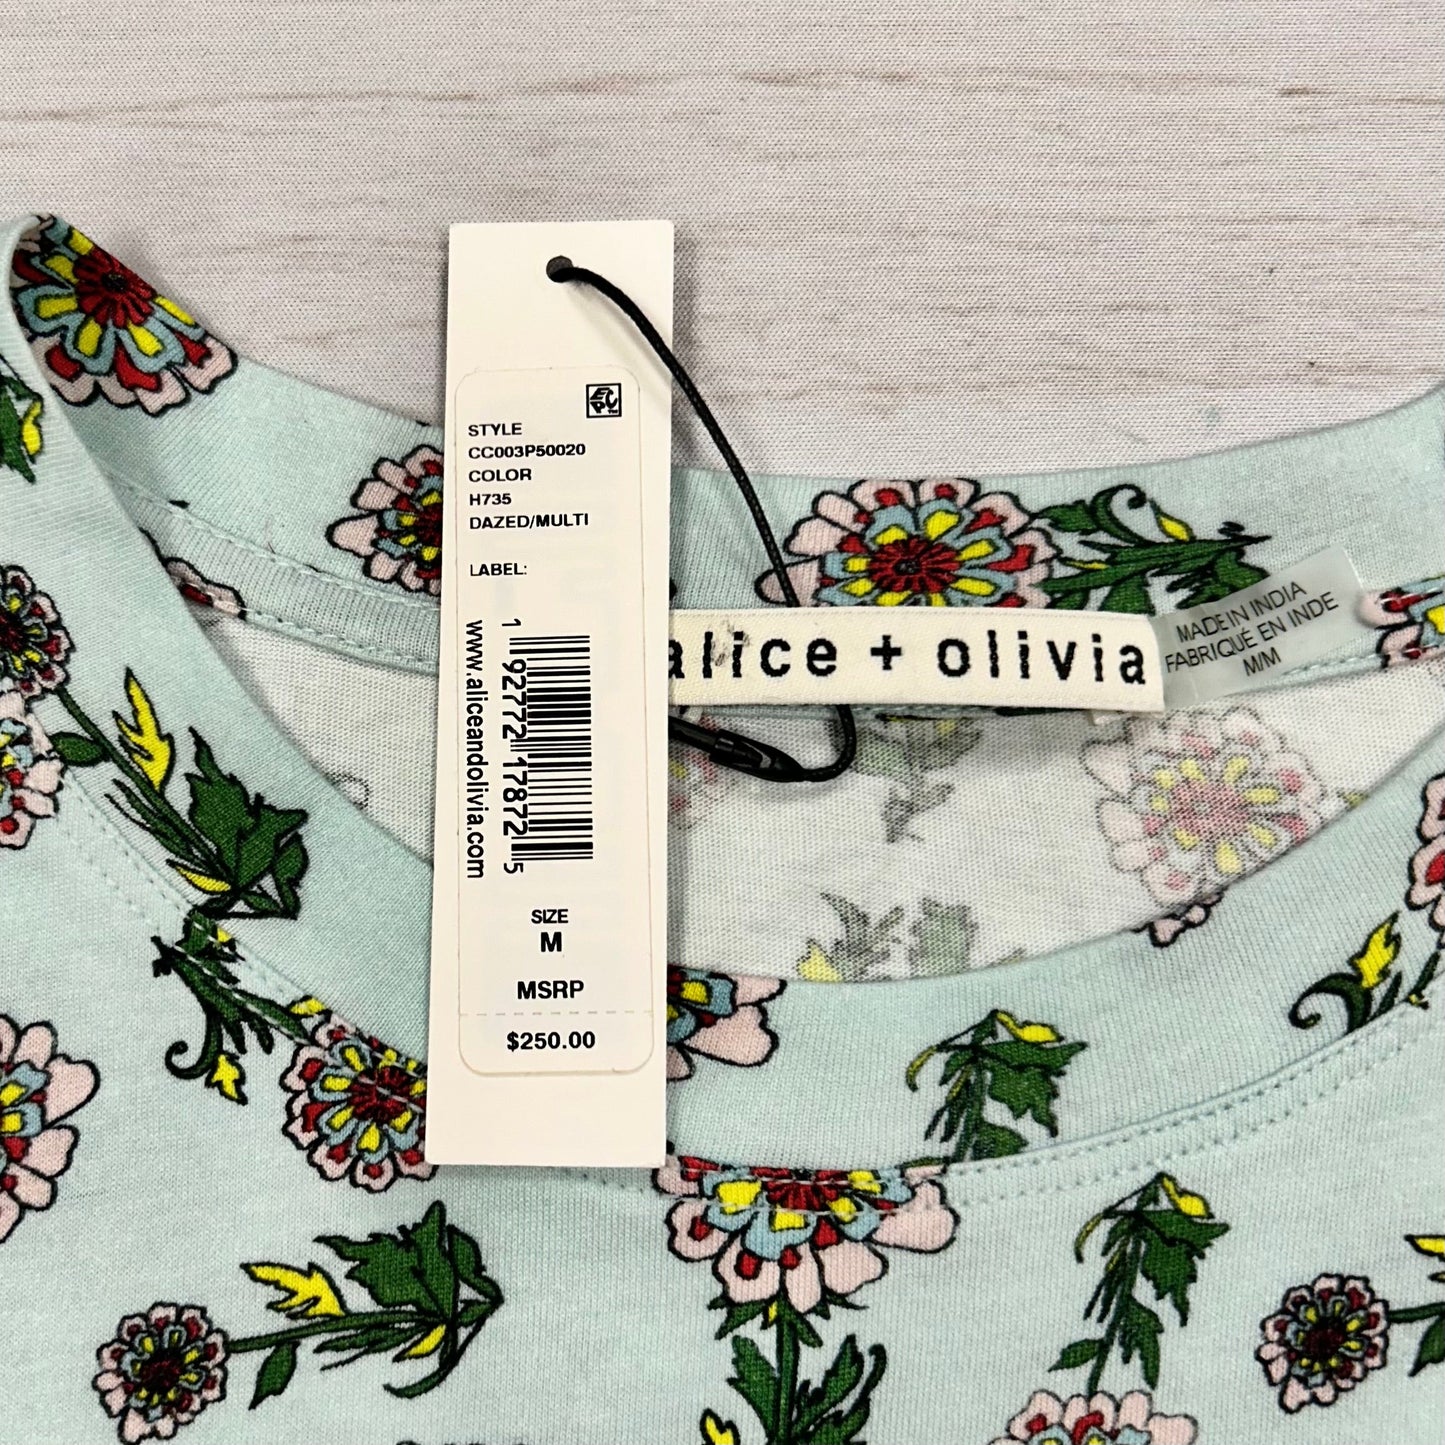 Top Short Sleeve Designer By Alice + Olivia  Size: M